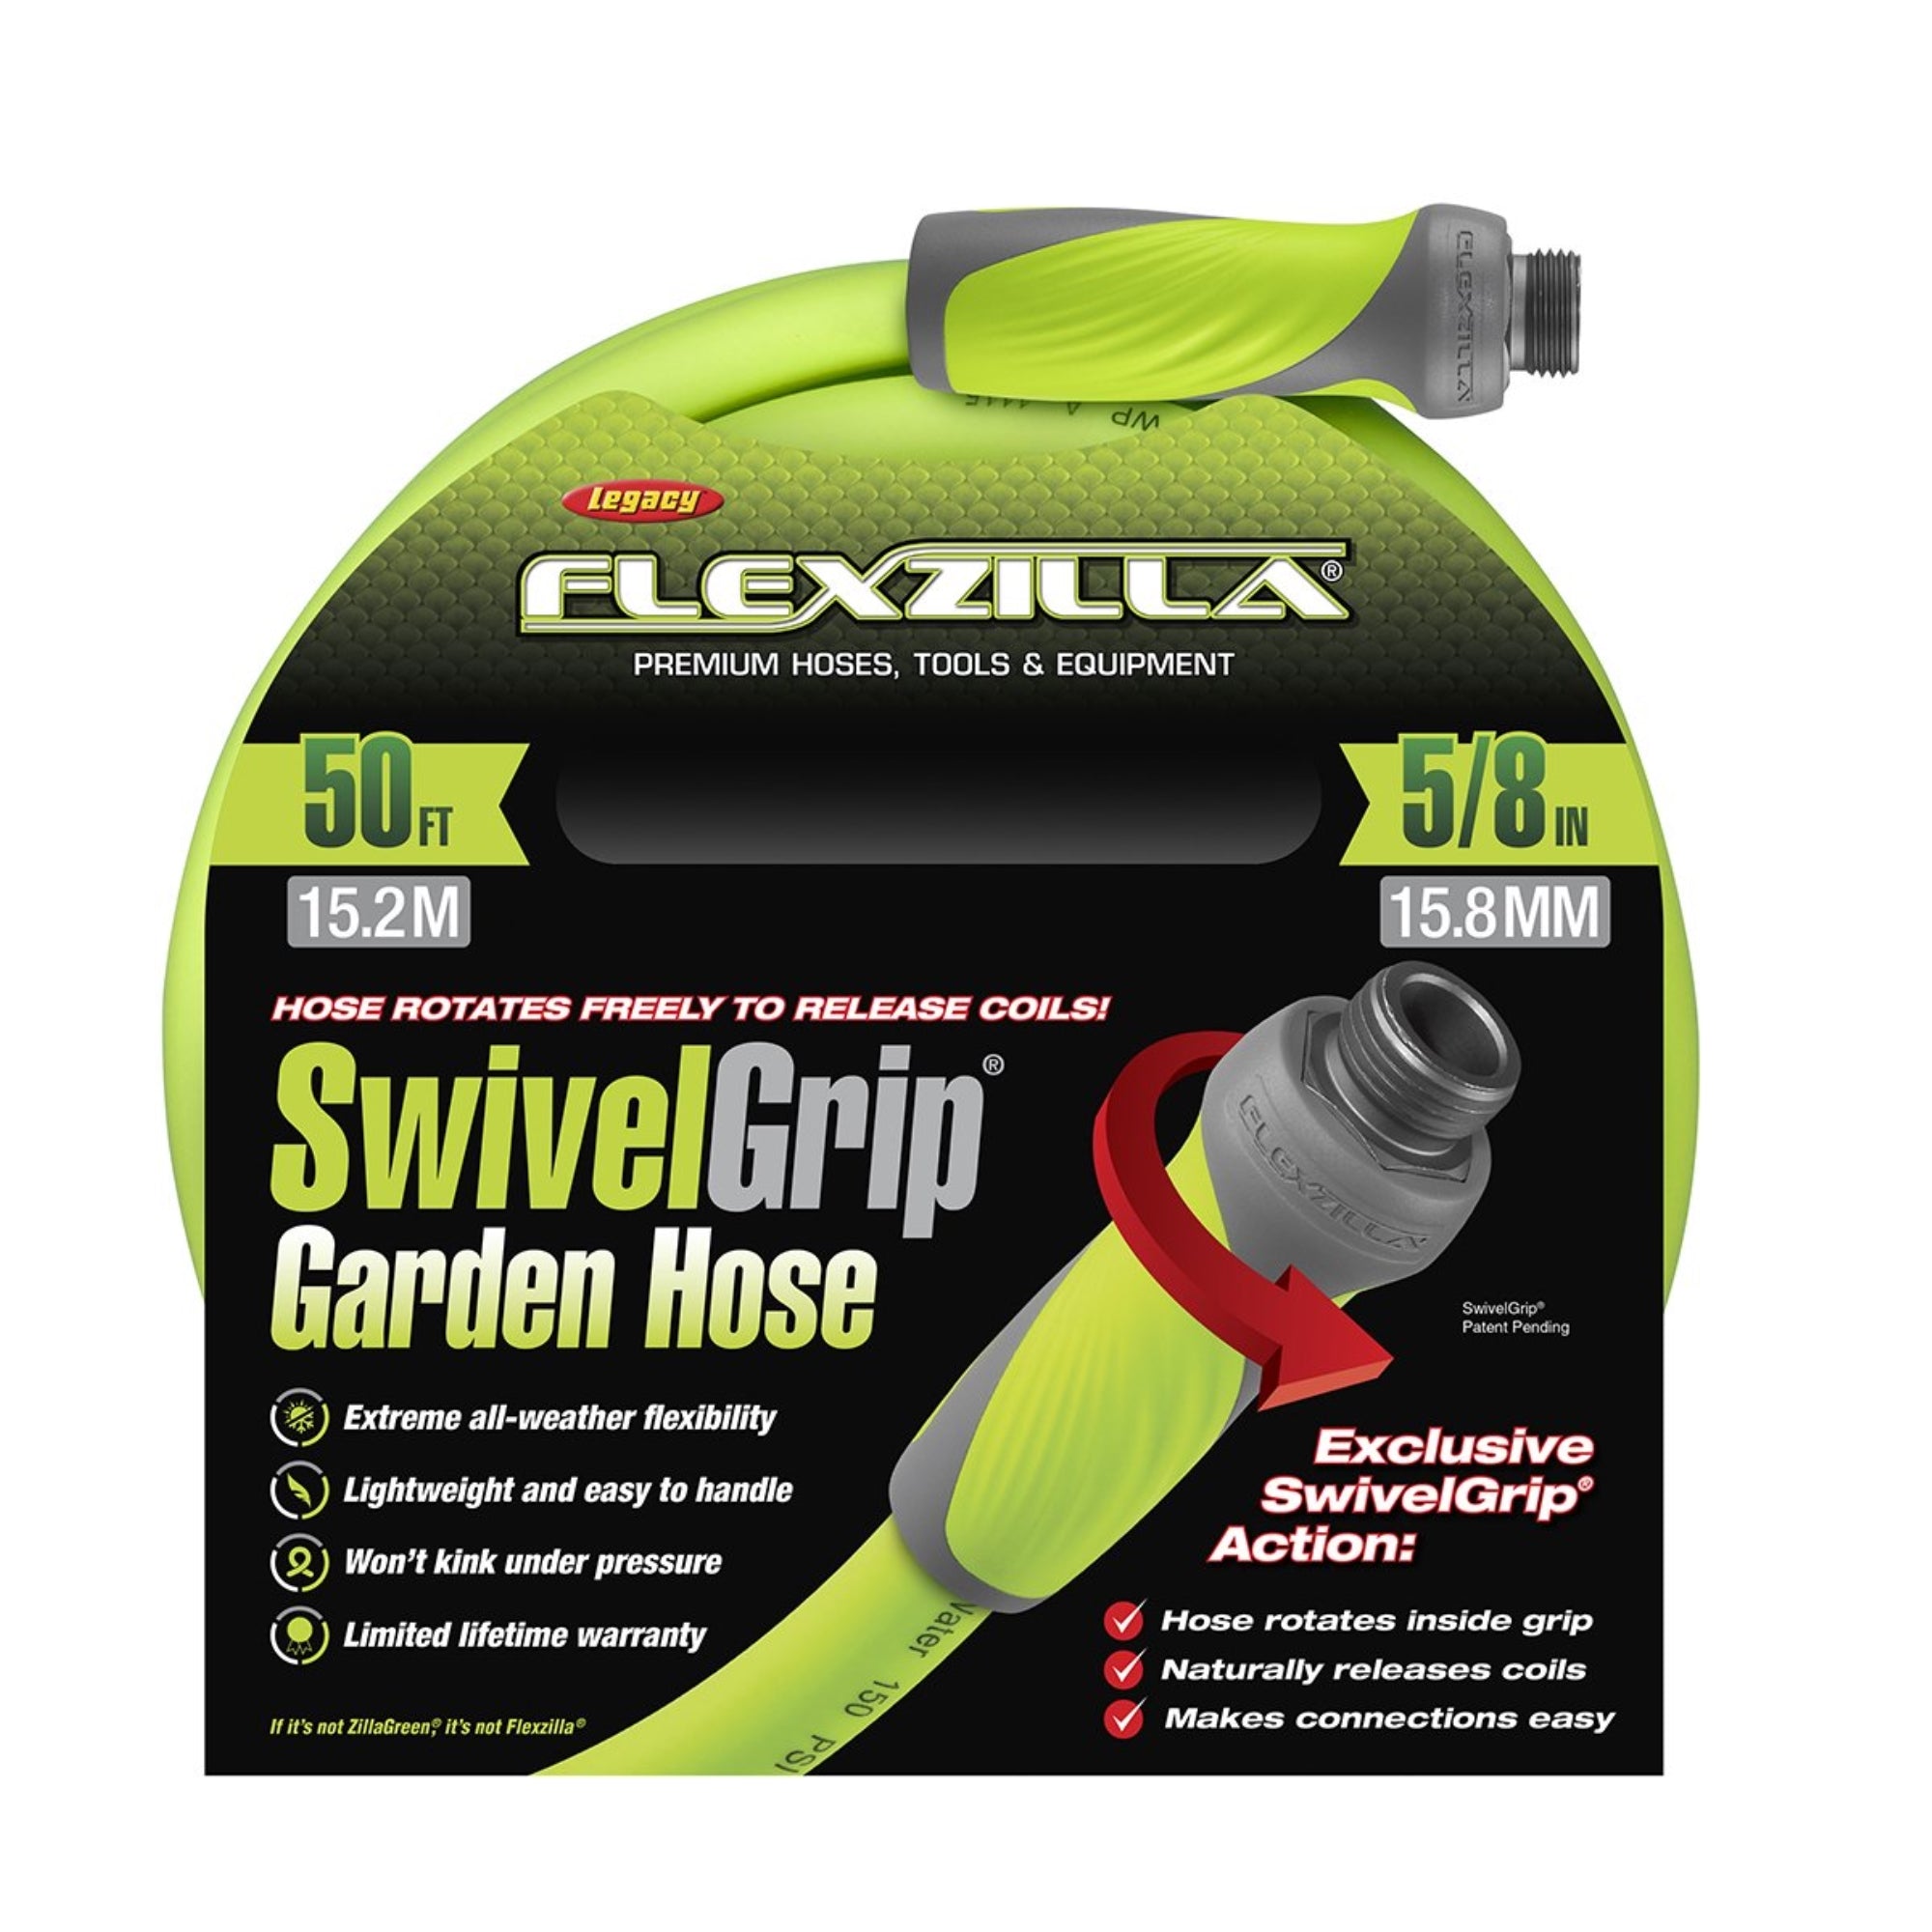 Flexzilla Garden Hose with SwivelGrip 50ft x 5/8inch